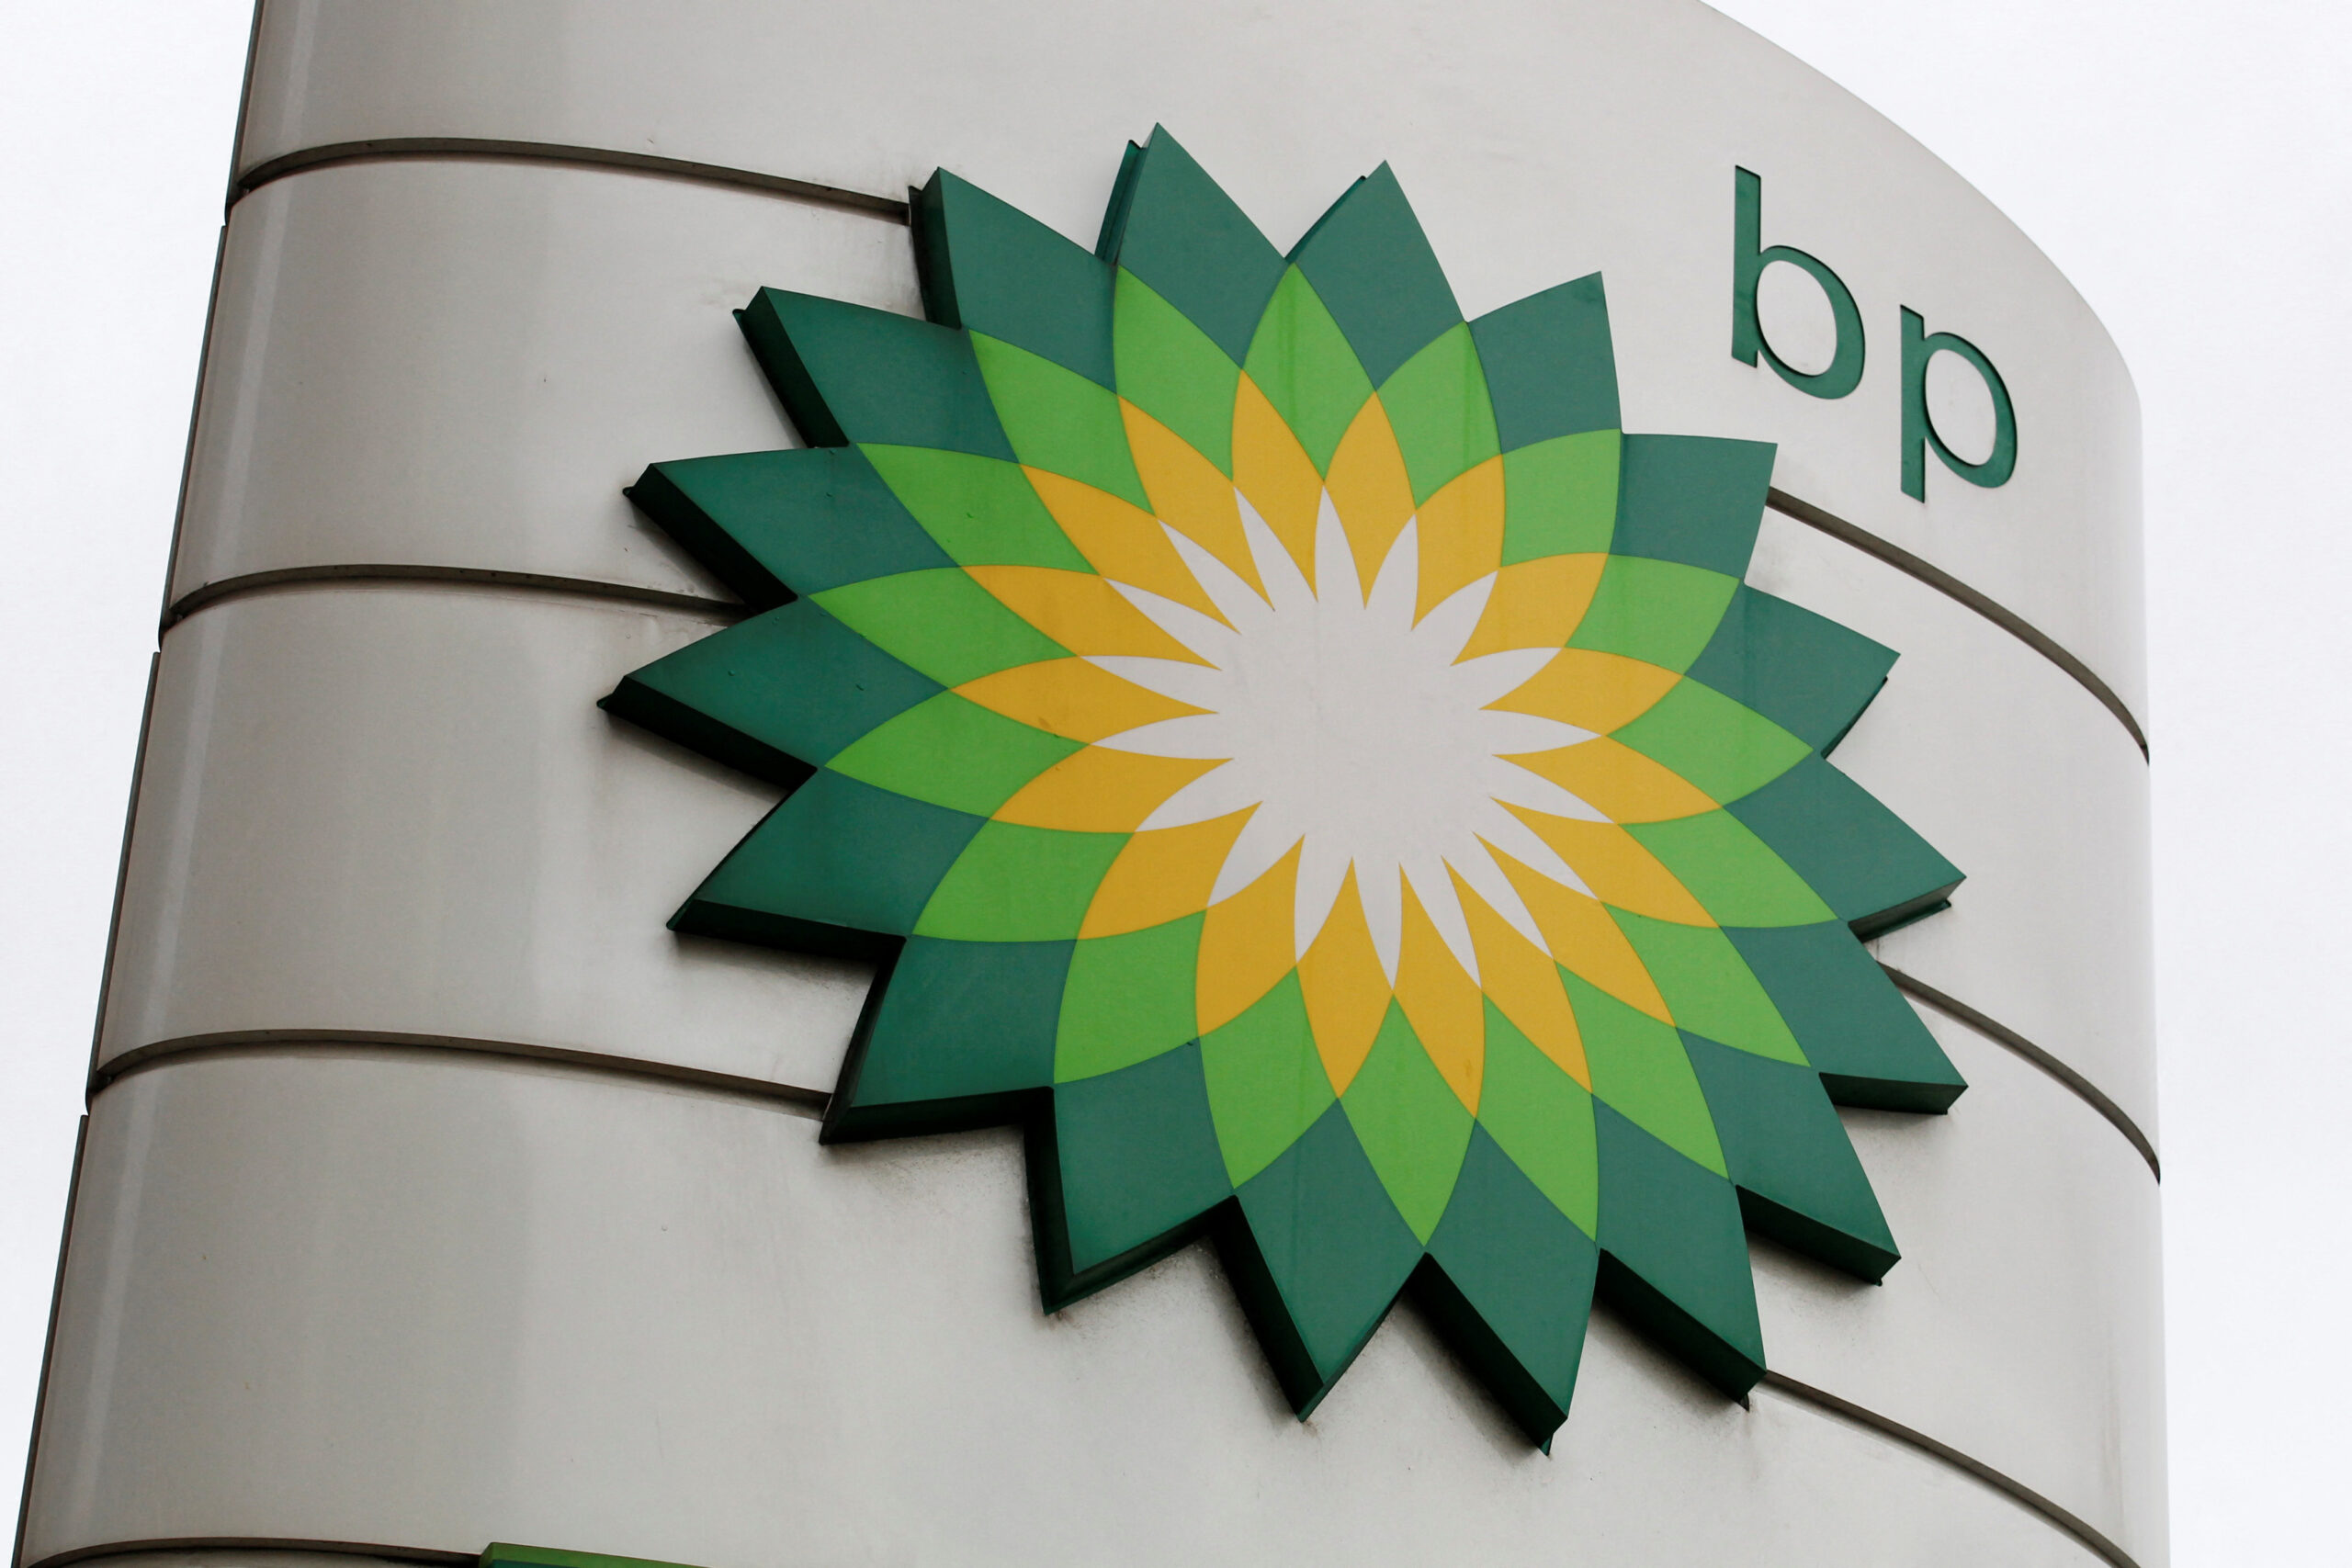 Sem Bunge, BP buscará expandir no Brasil em etanol, biogás e SAF